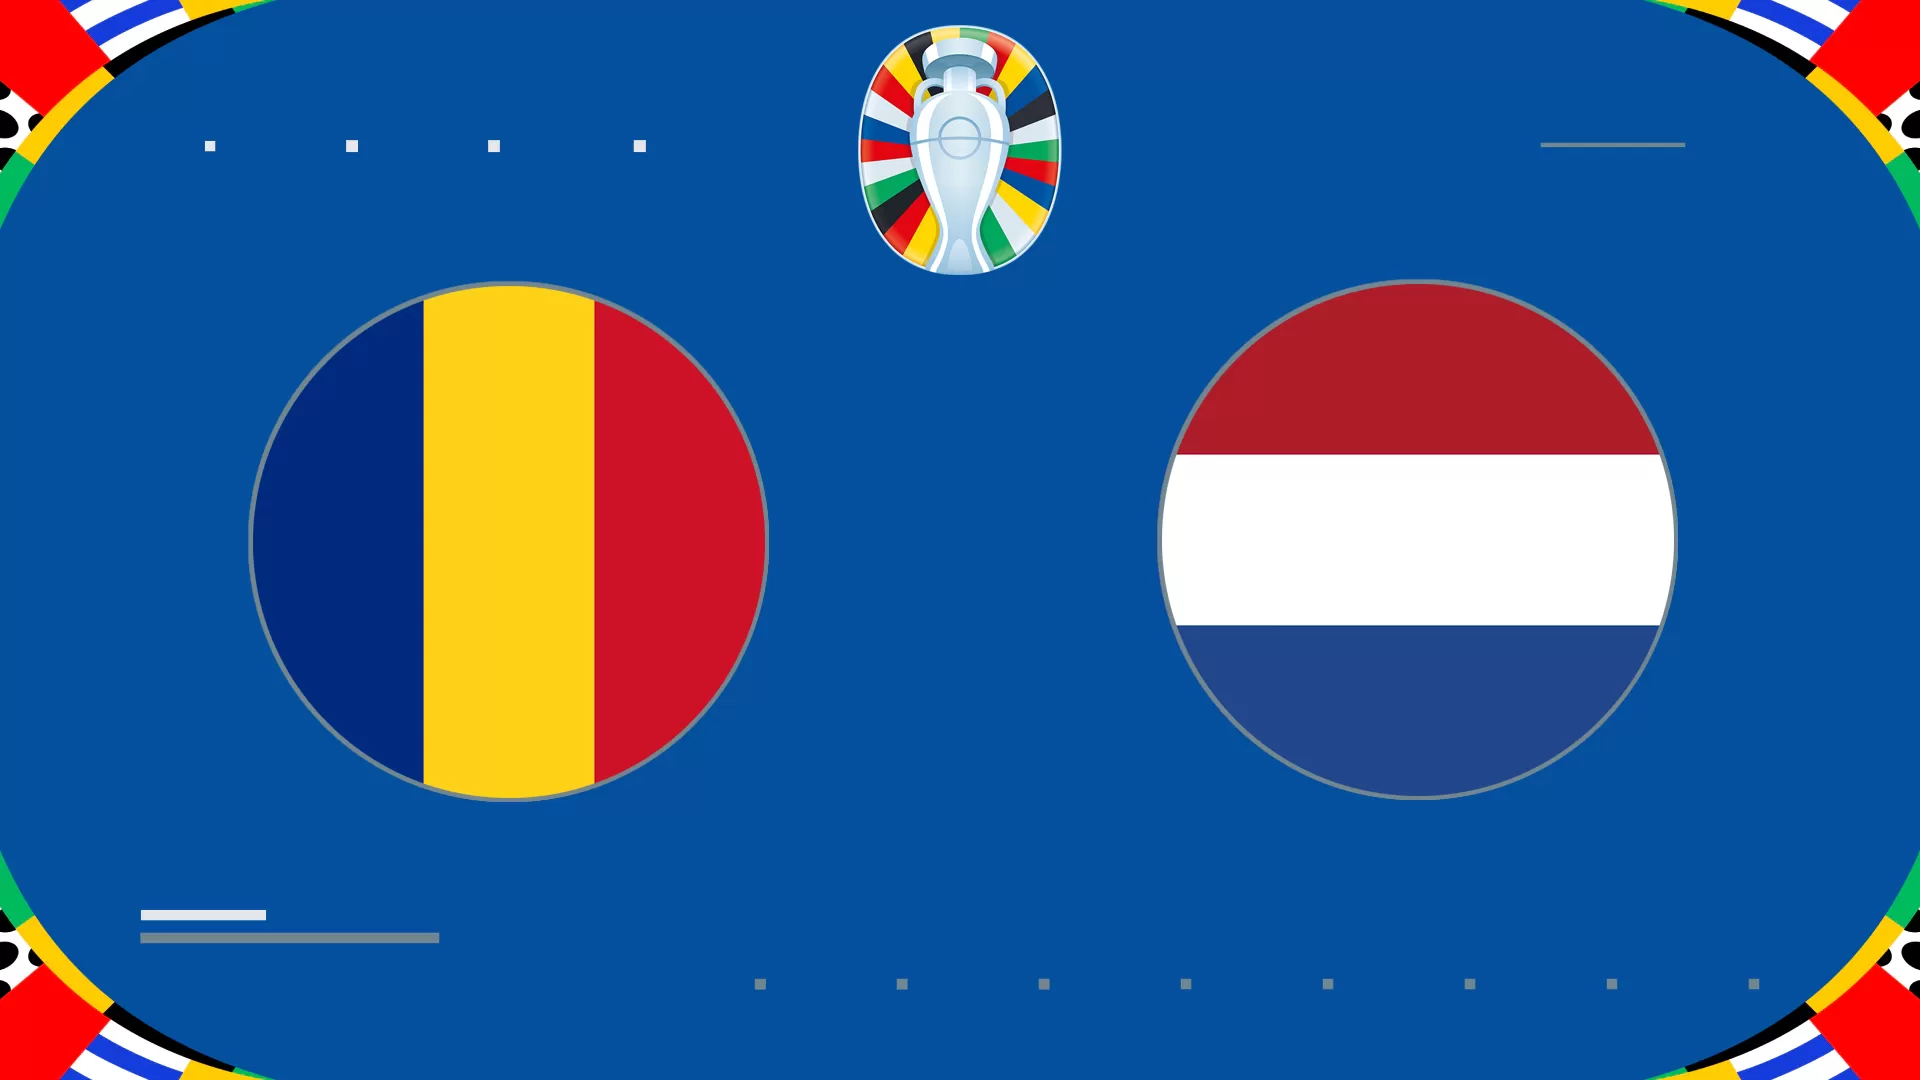 Romania vs Netherlands